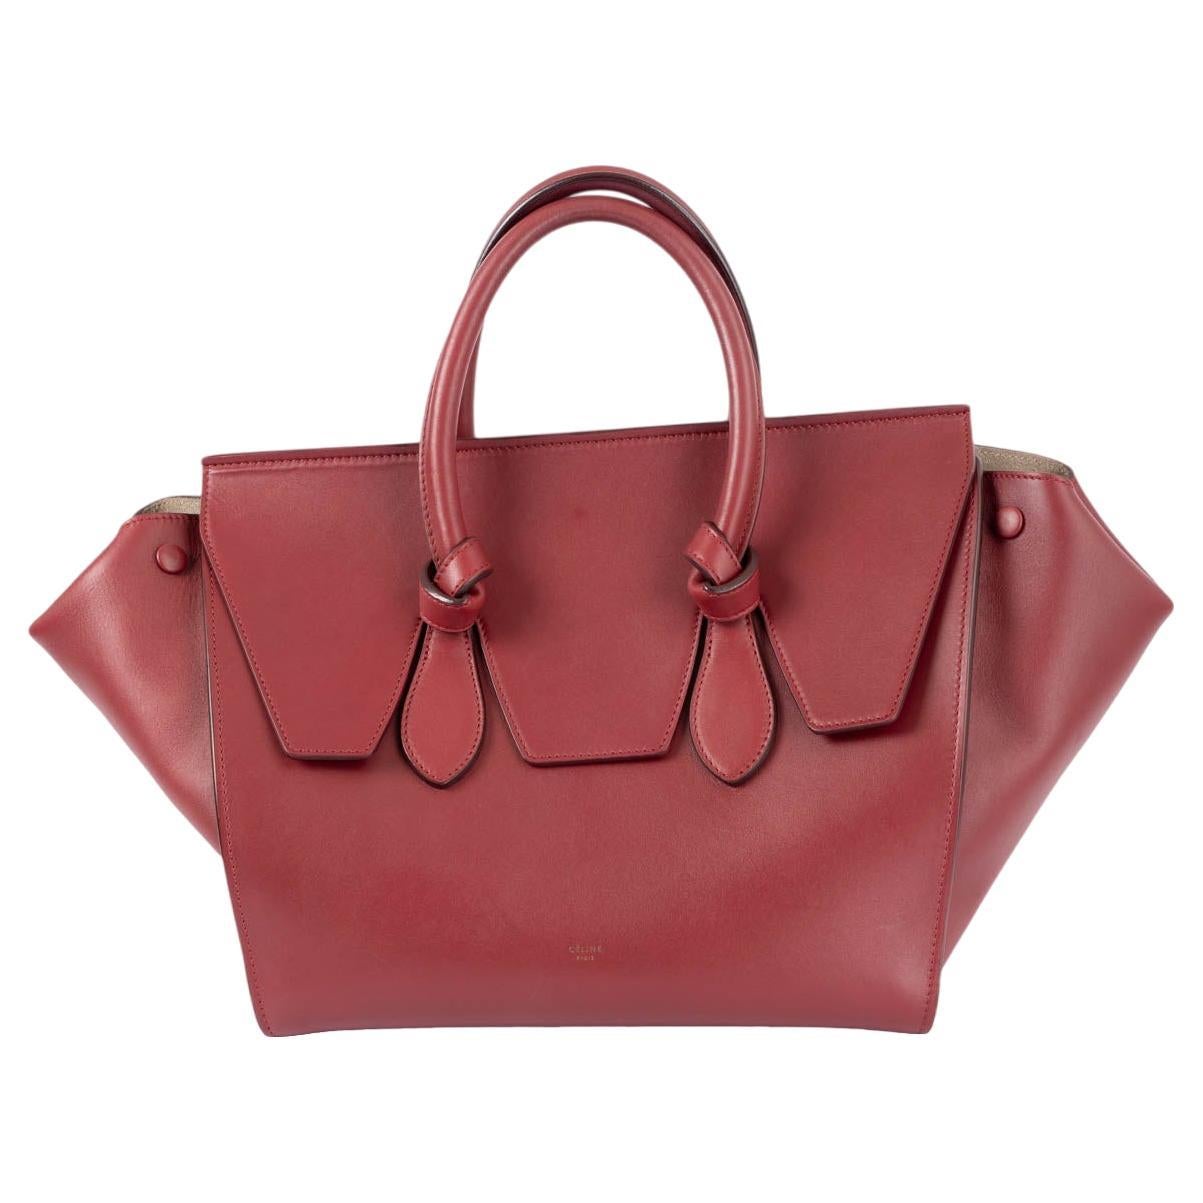 CELINE burgundy leather SMALL TIE Tote Bag